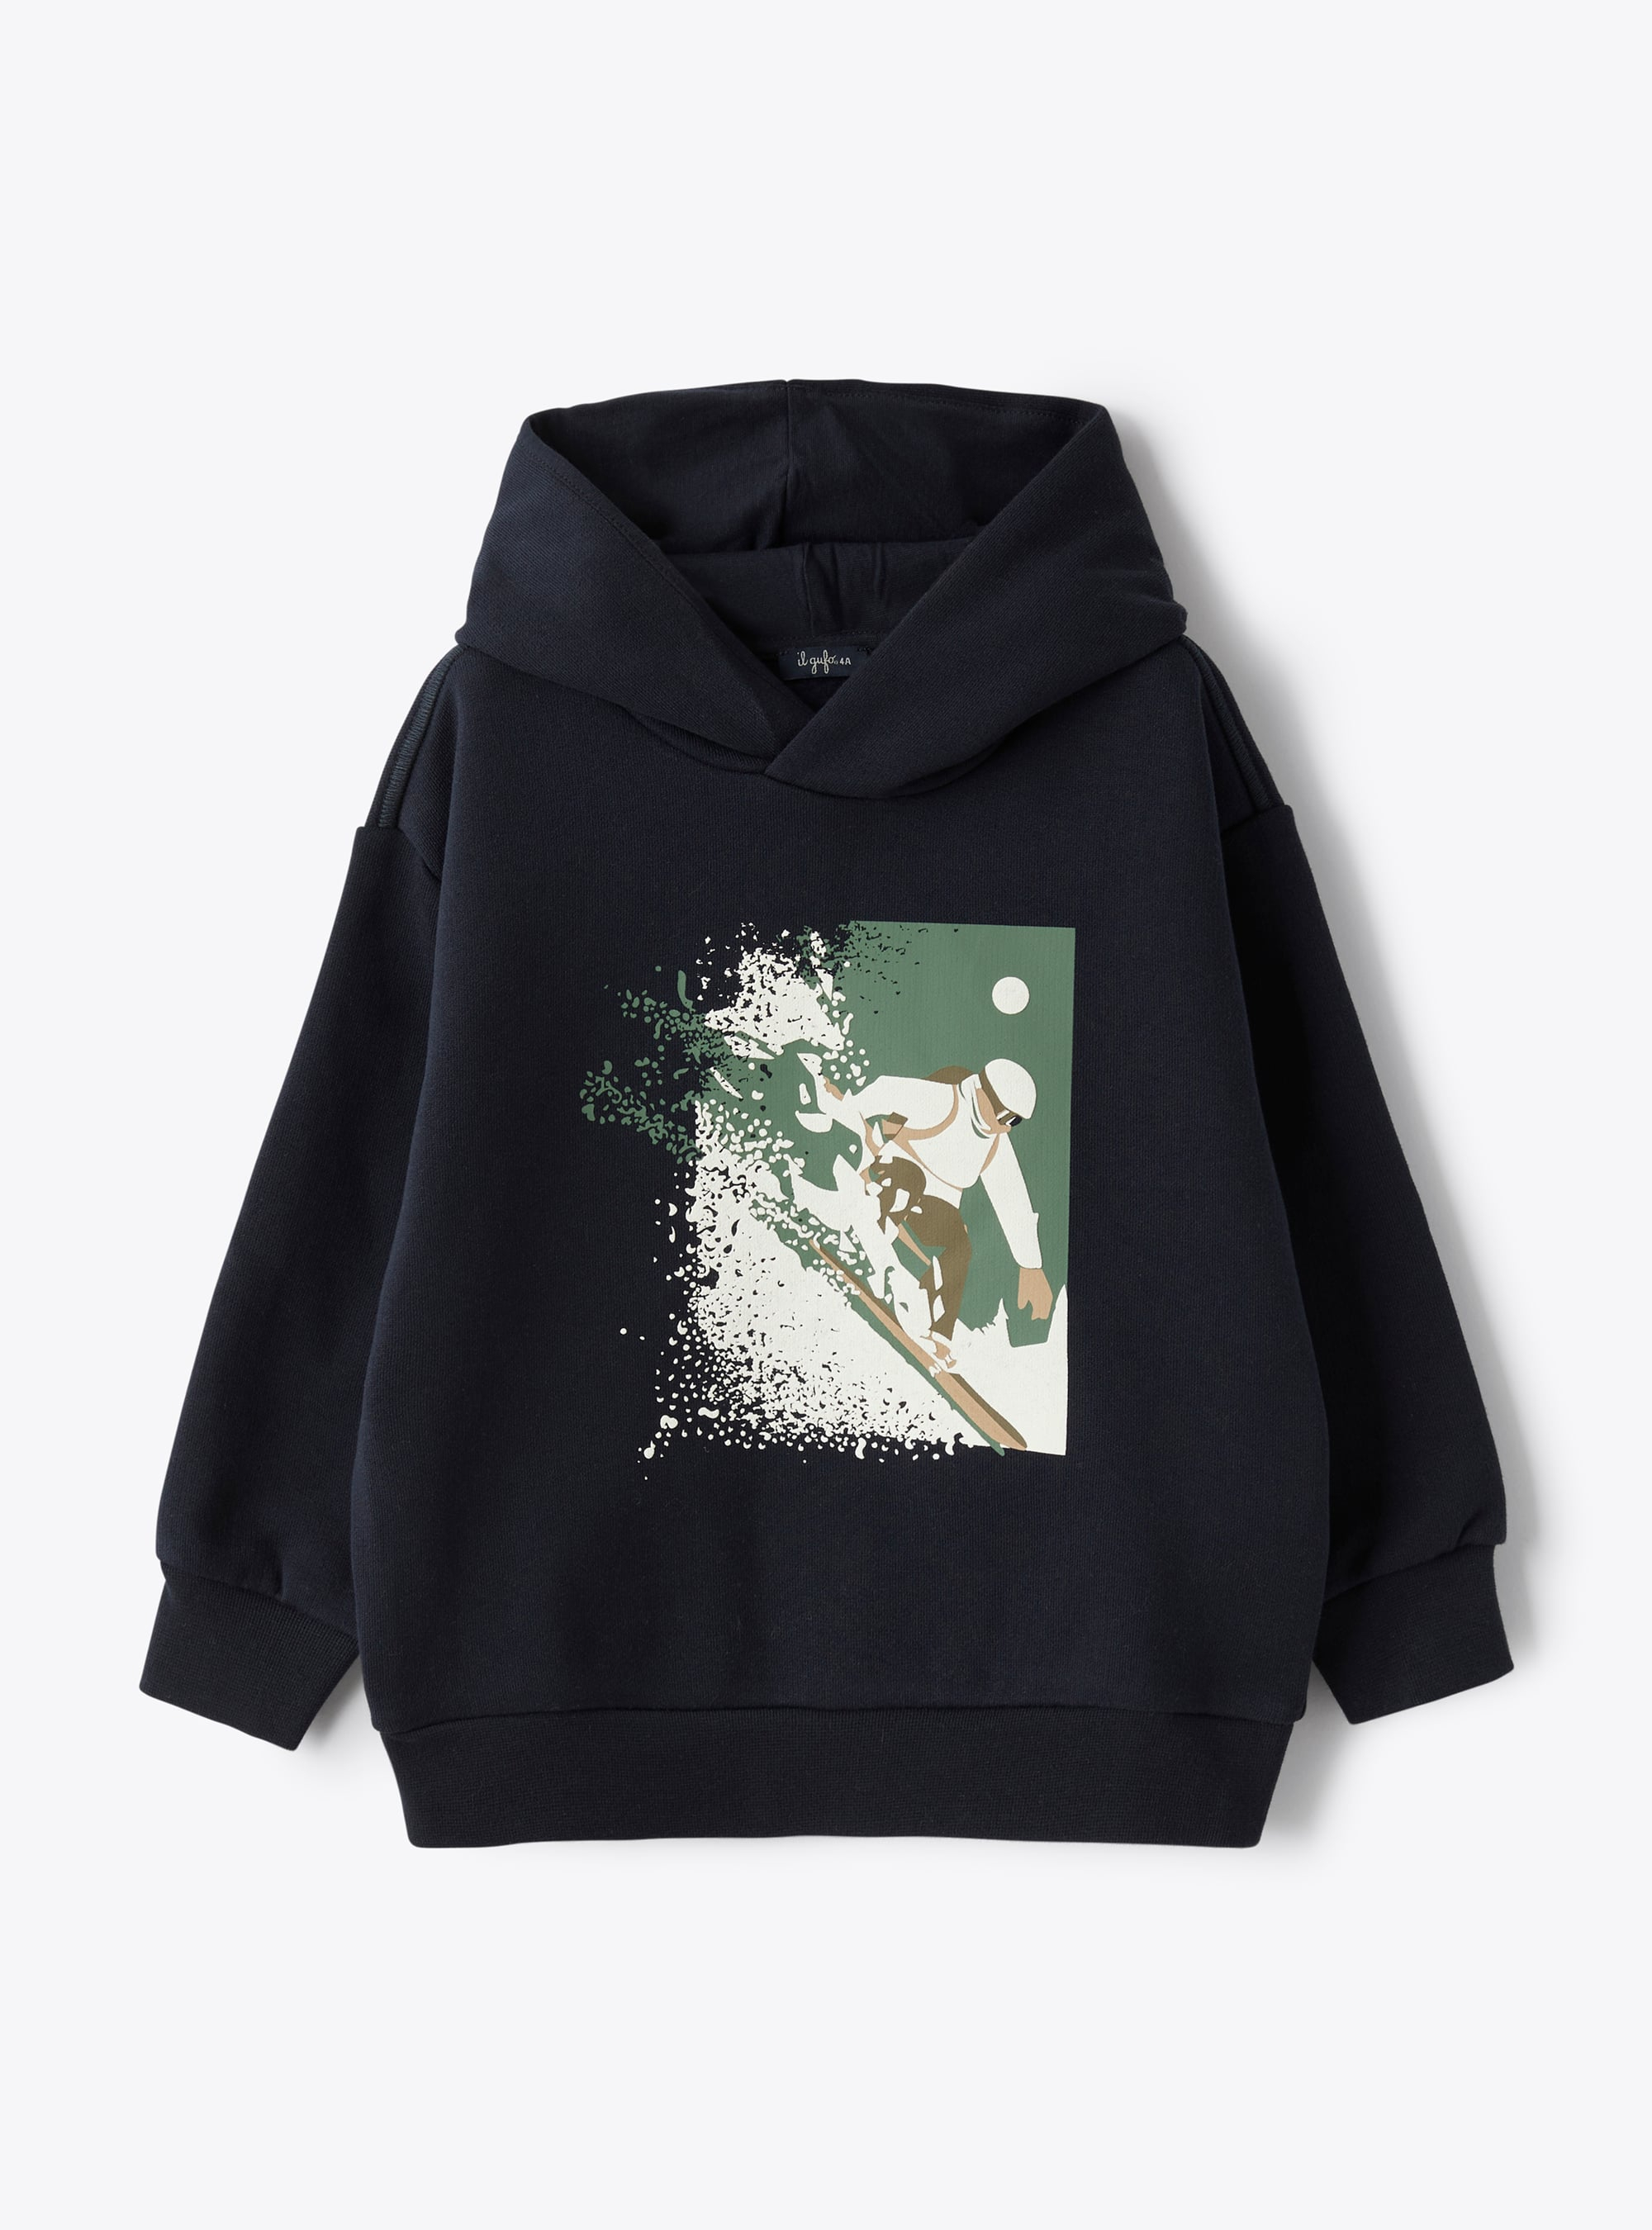 Sweatshirt with snowboarder print design - Sweatshirts - Il Gufo